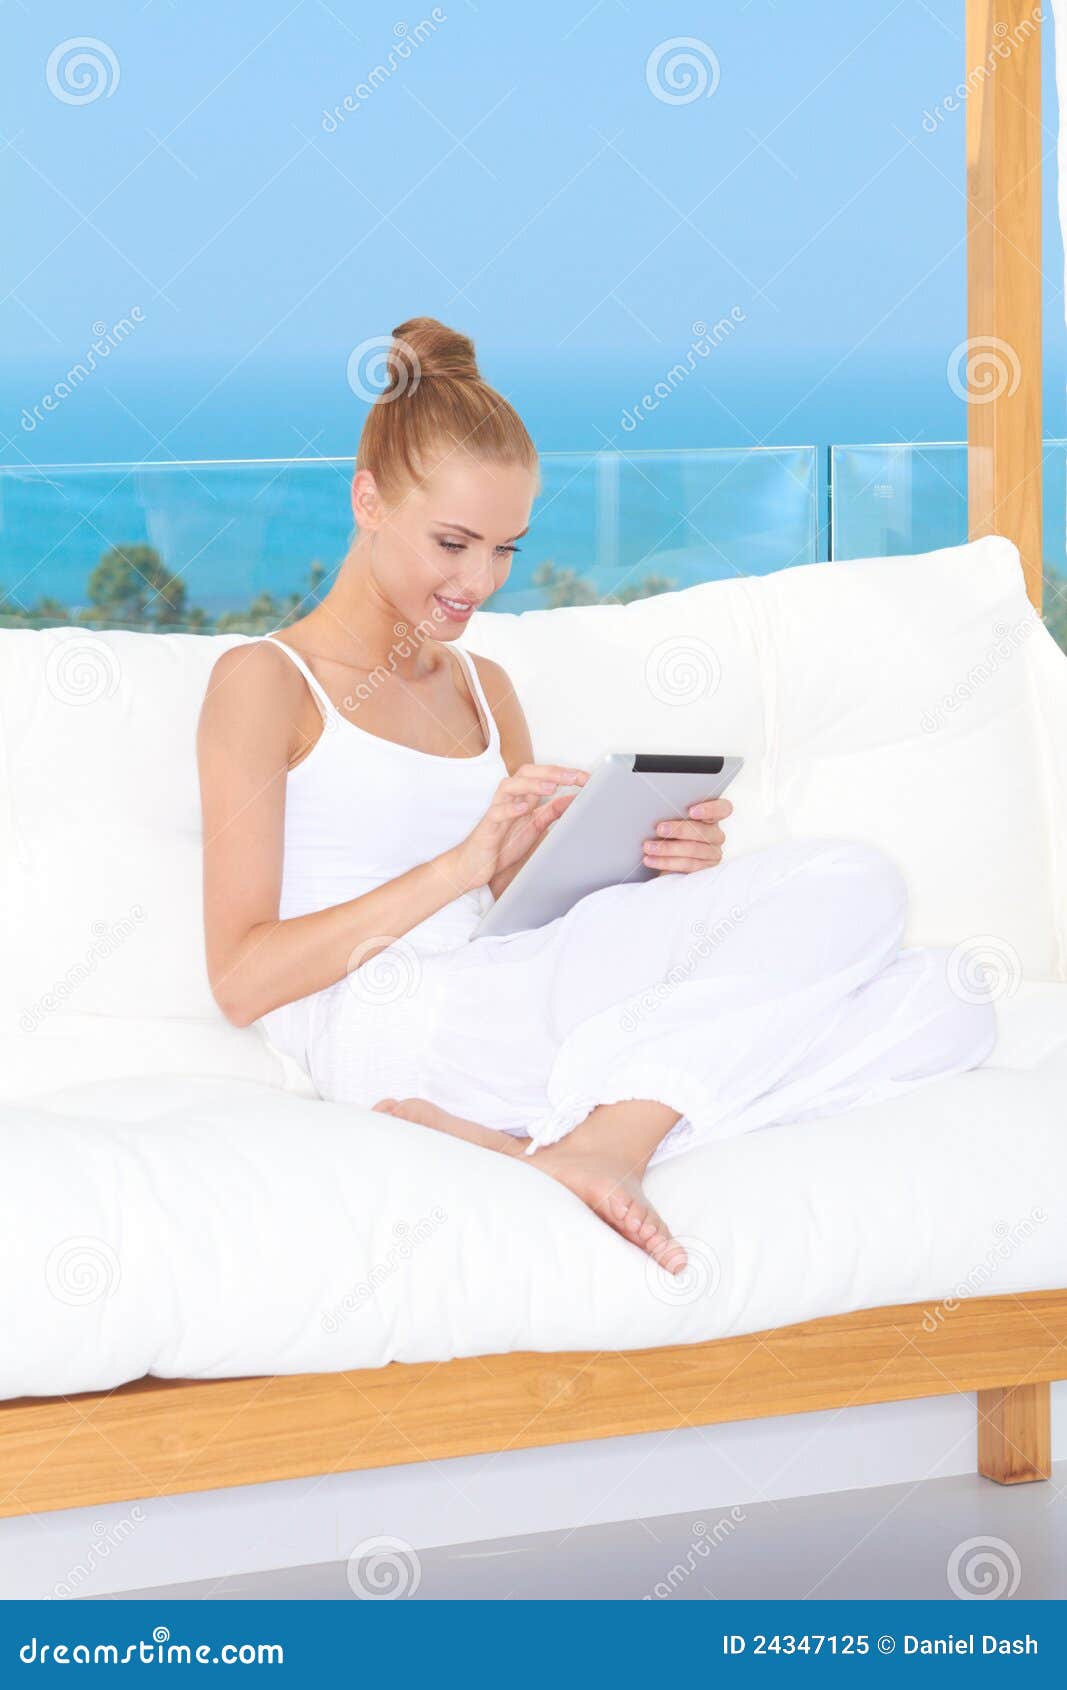 beautiful woman using a touchpad notebook